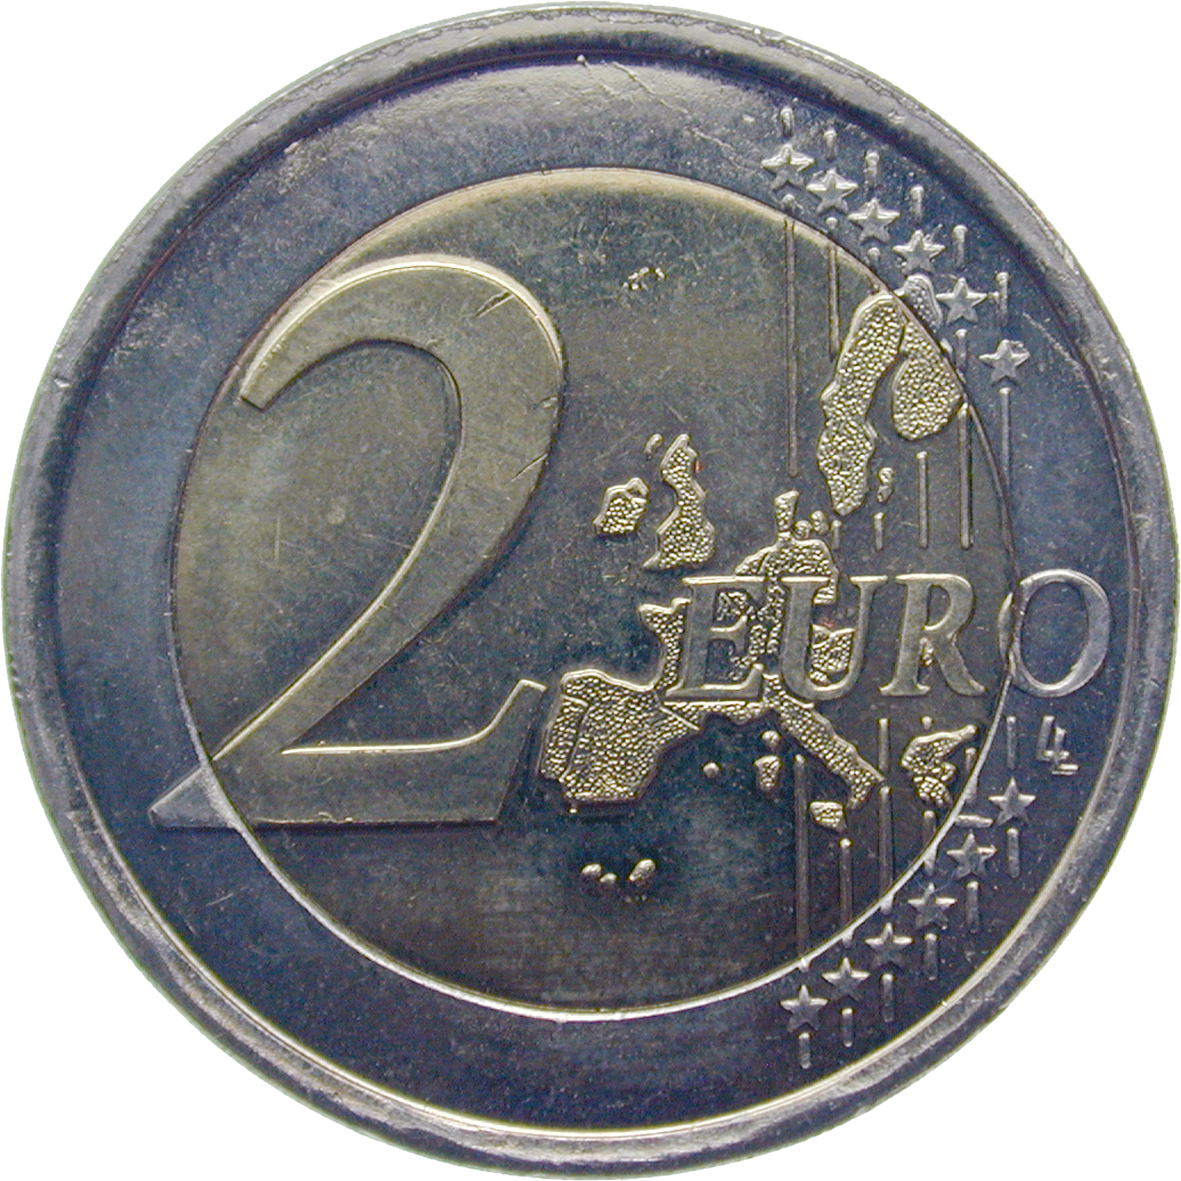 Republic of Finland, 2 Euro 2001 (obverse)